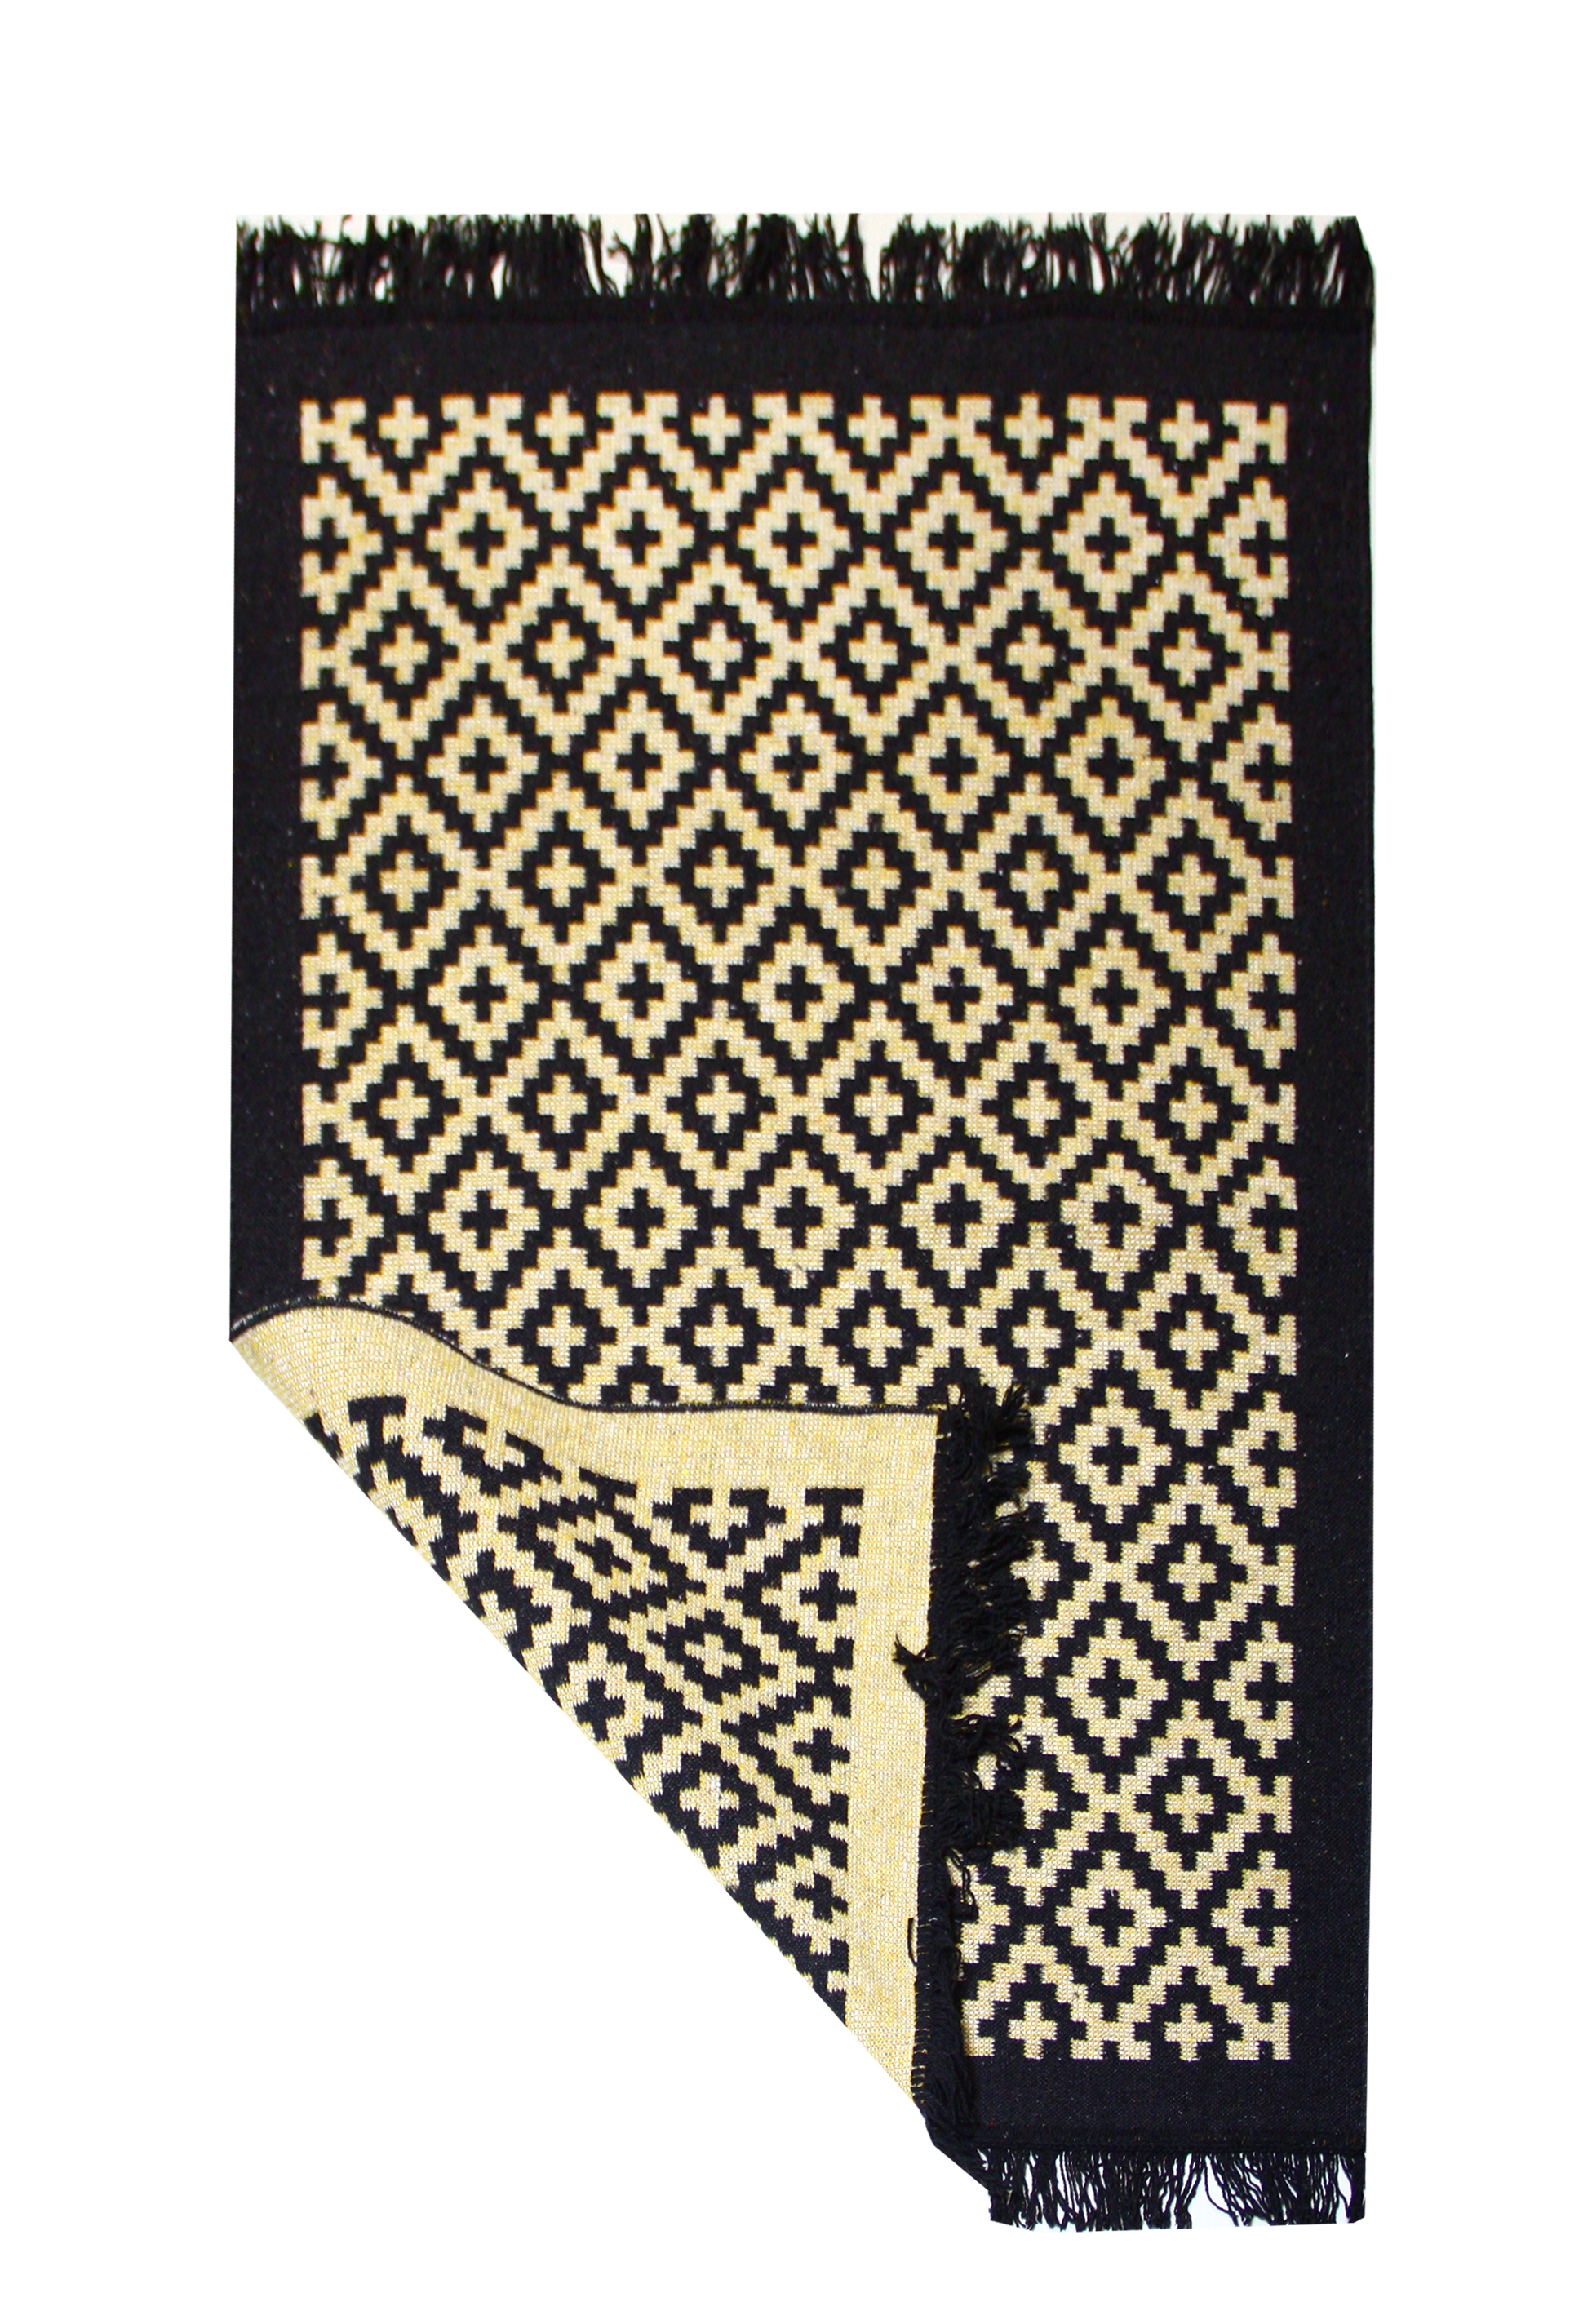 Ковер двусторонний IzziHome Lara Siyah Sari Lr01, 180х120 см, черный с желтым (2200000554291) - фото 3